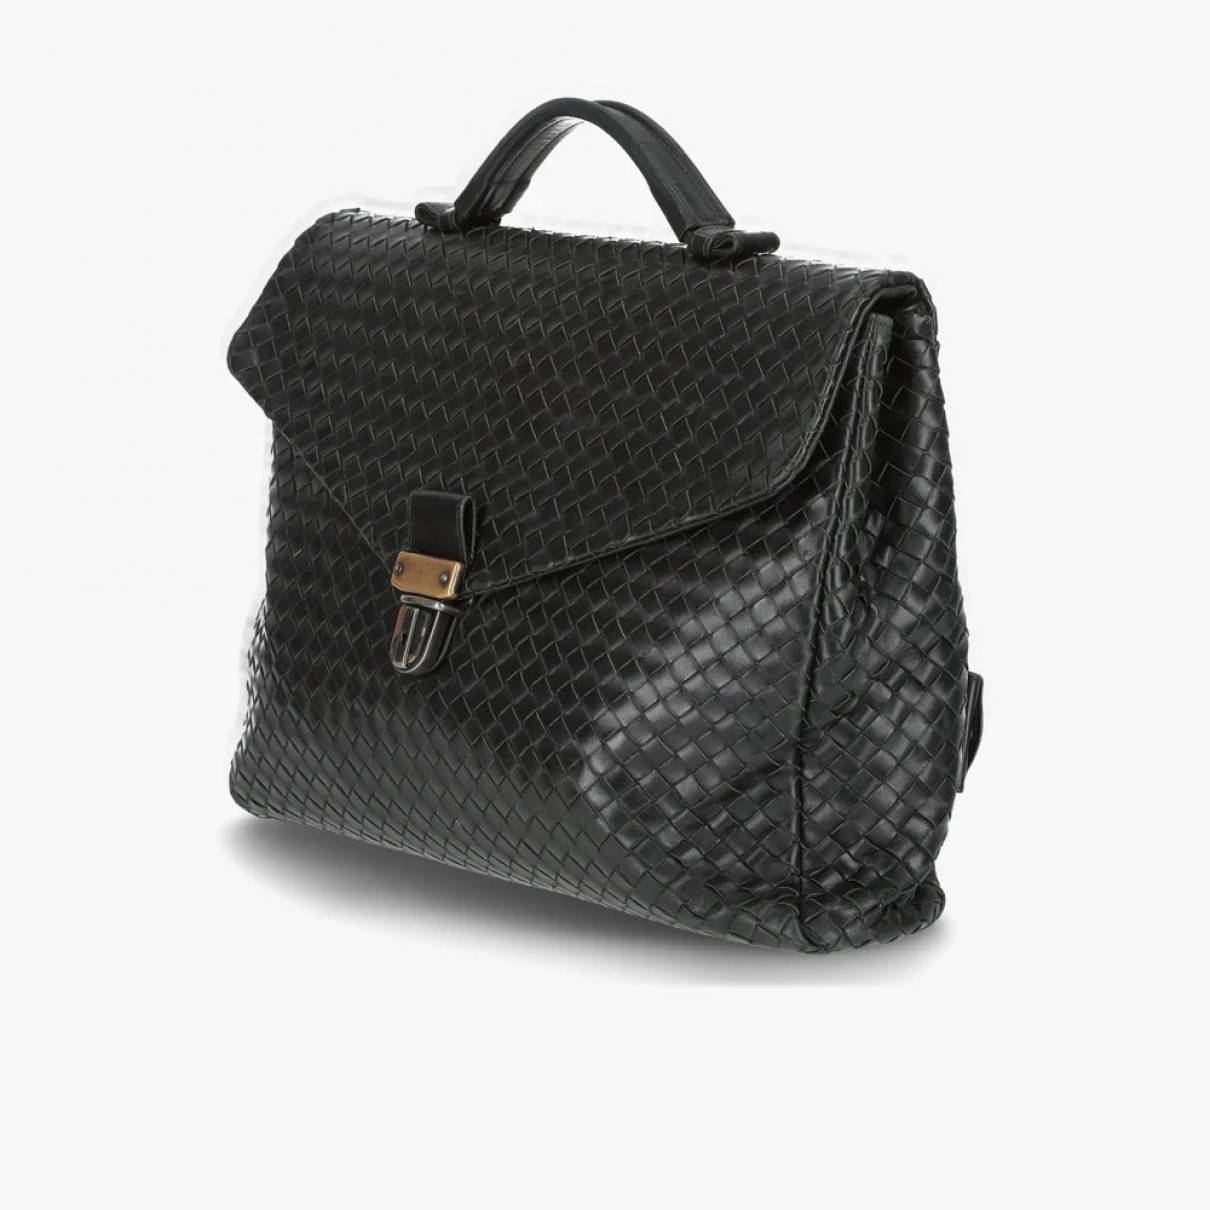 Buy Bottega Veneta City Veneta leather handbag online